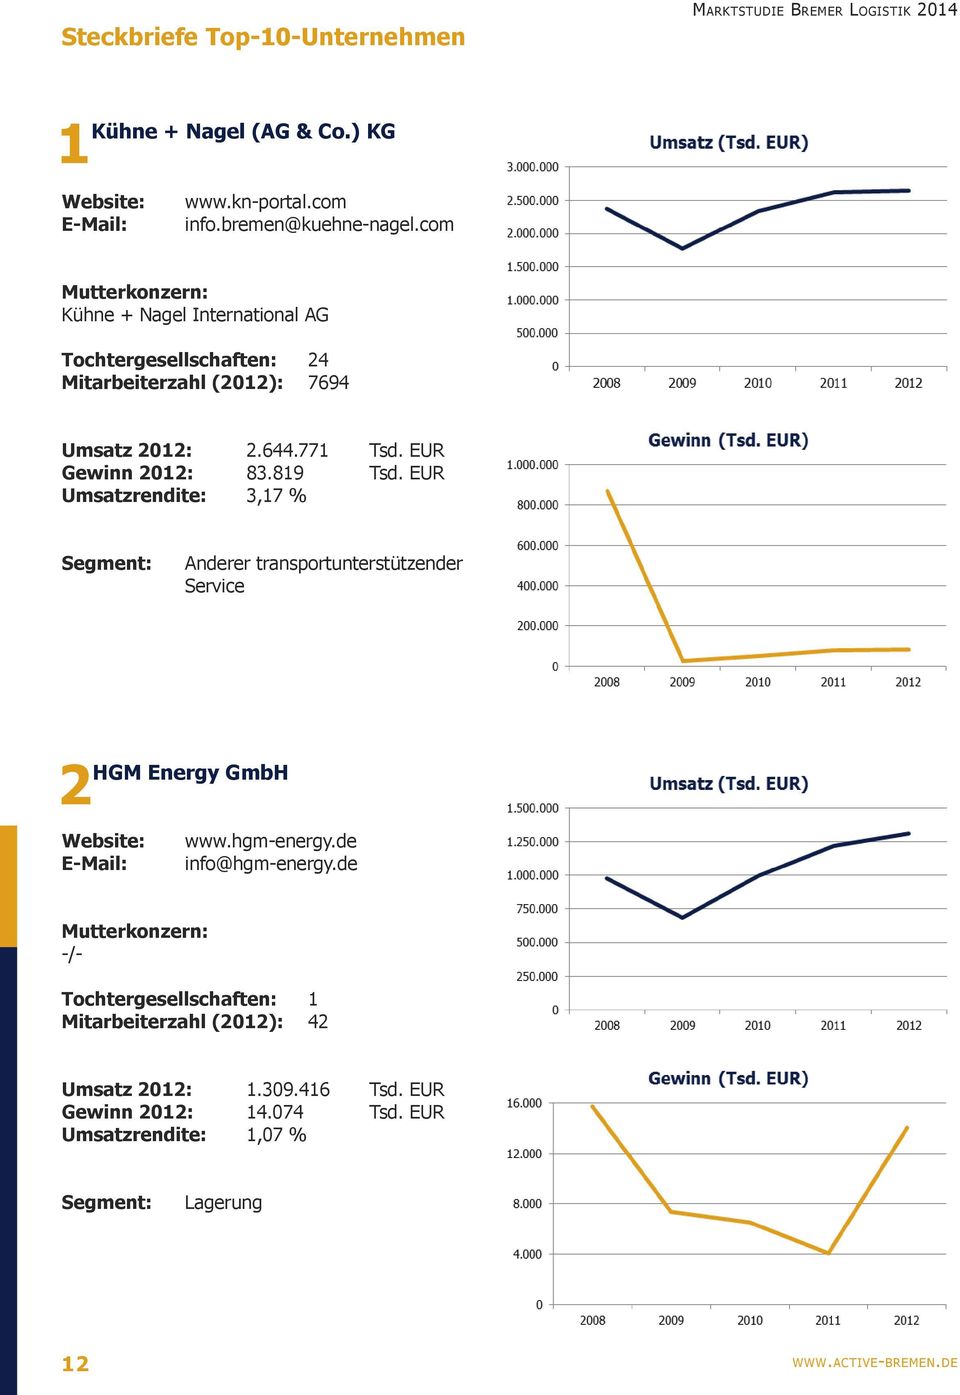 EUR Umsatzrendite: 3,17 % Segment: Anderer transportunterstützender Service HGM Energy GmbH 2 Website: E-Mail: www.hgm-energy.de info@hgm-energy.